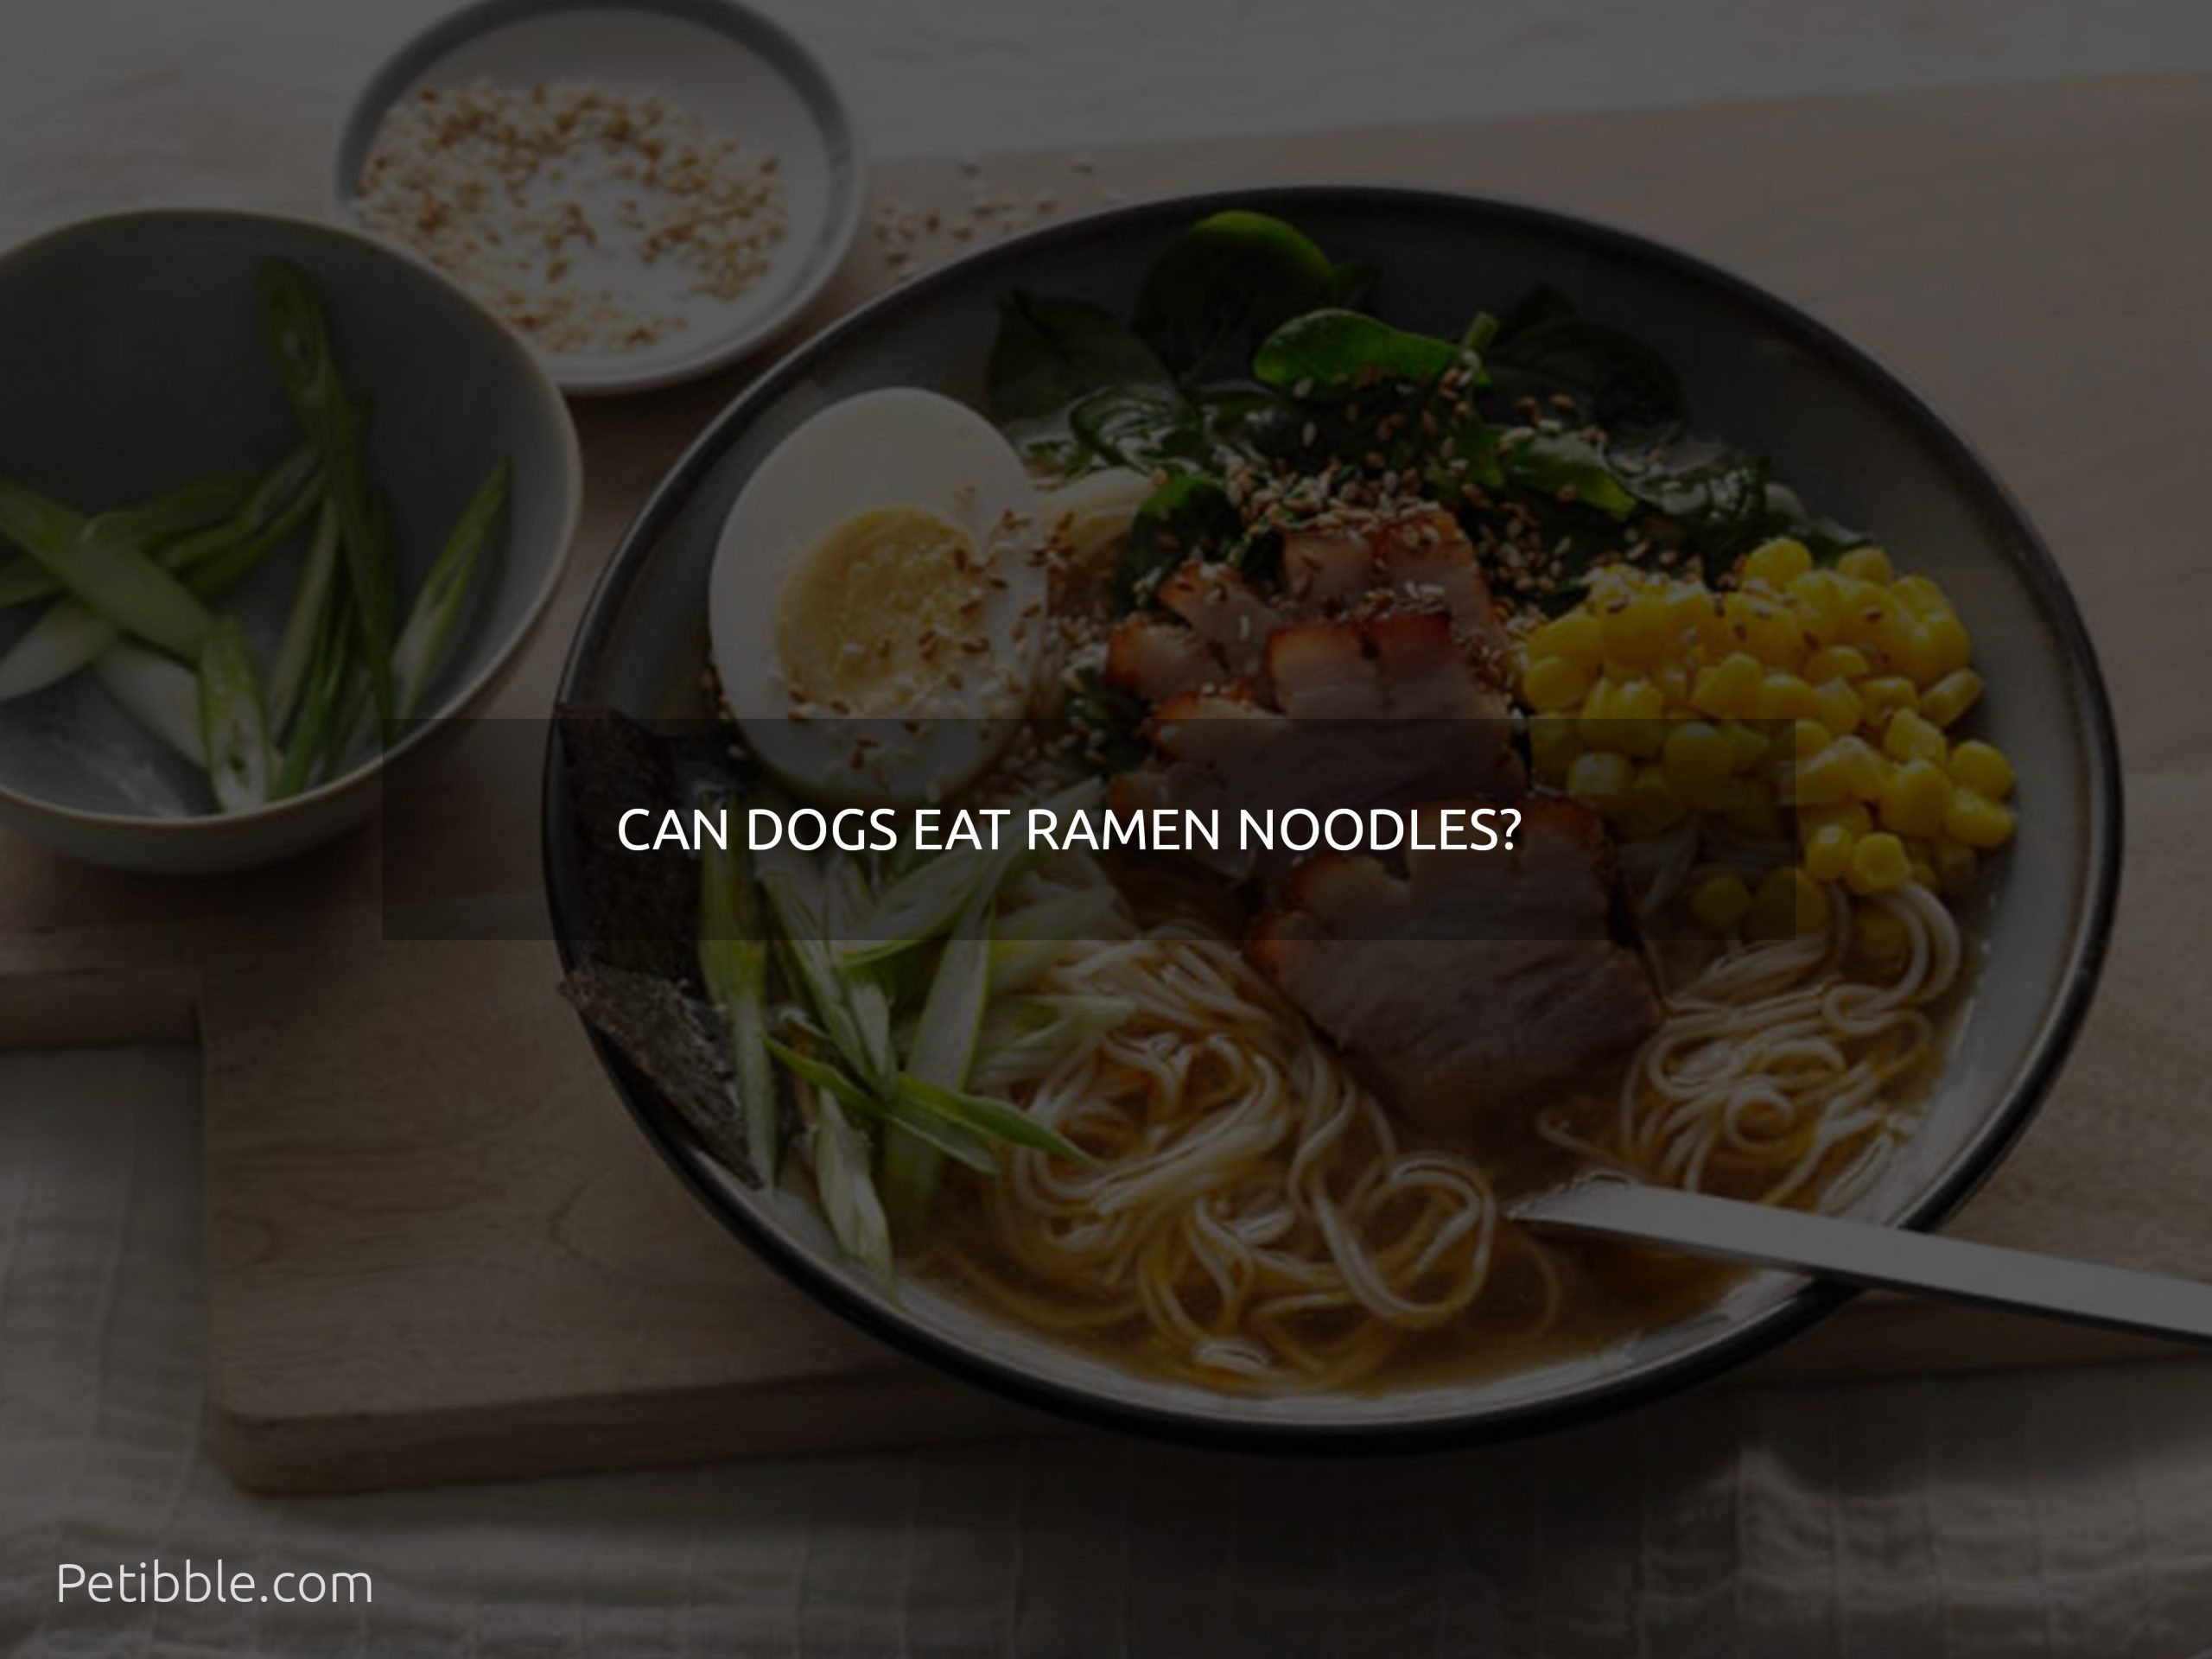  can dogs eat ramen noodles